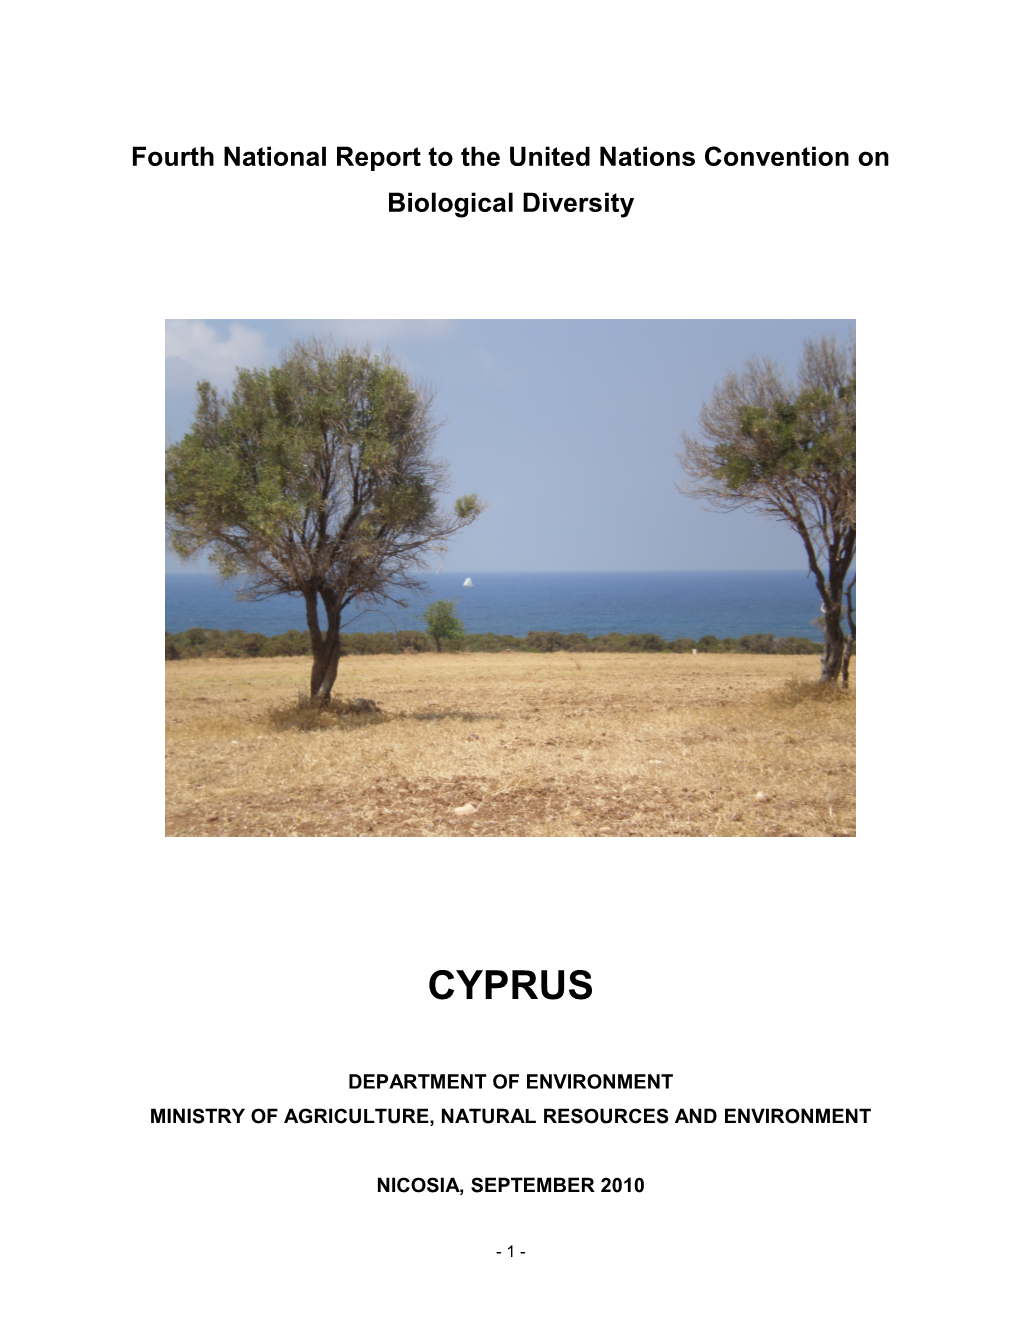 CBD Fourth National Report - Cyprus (English Version)